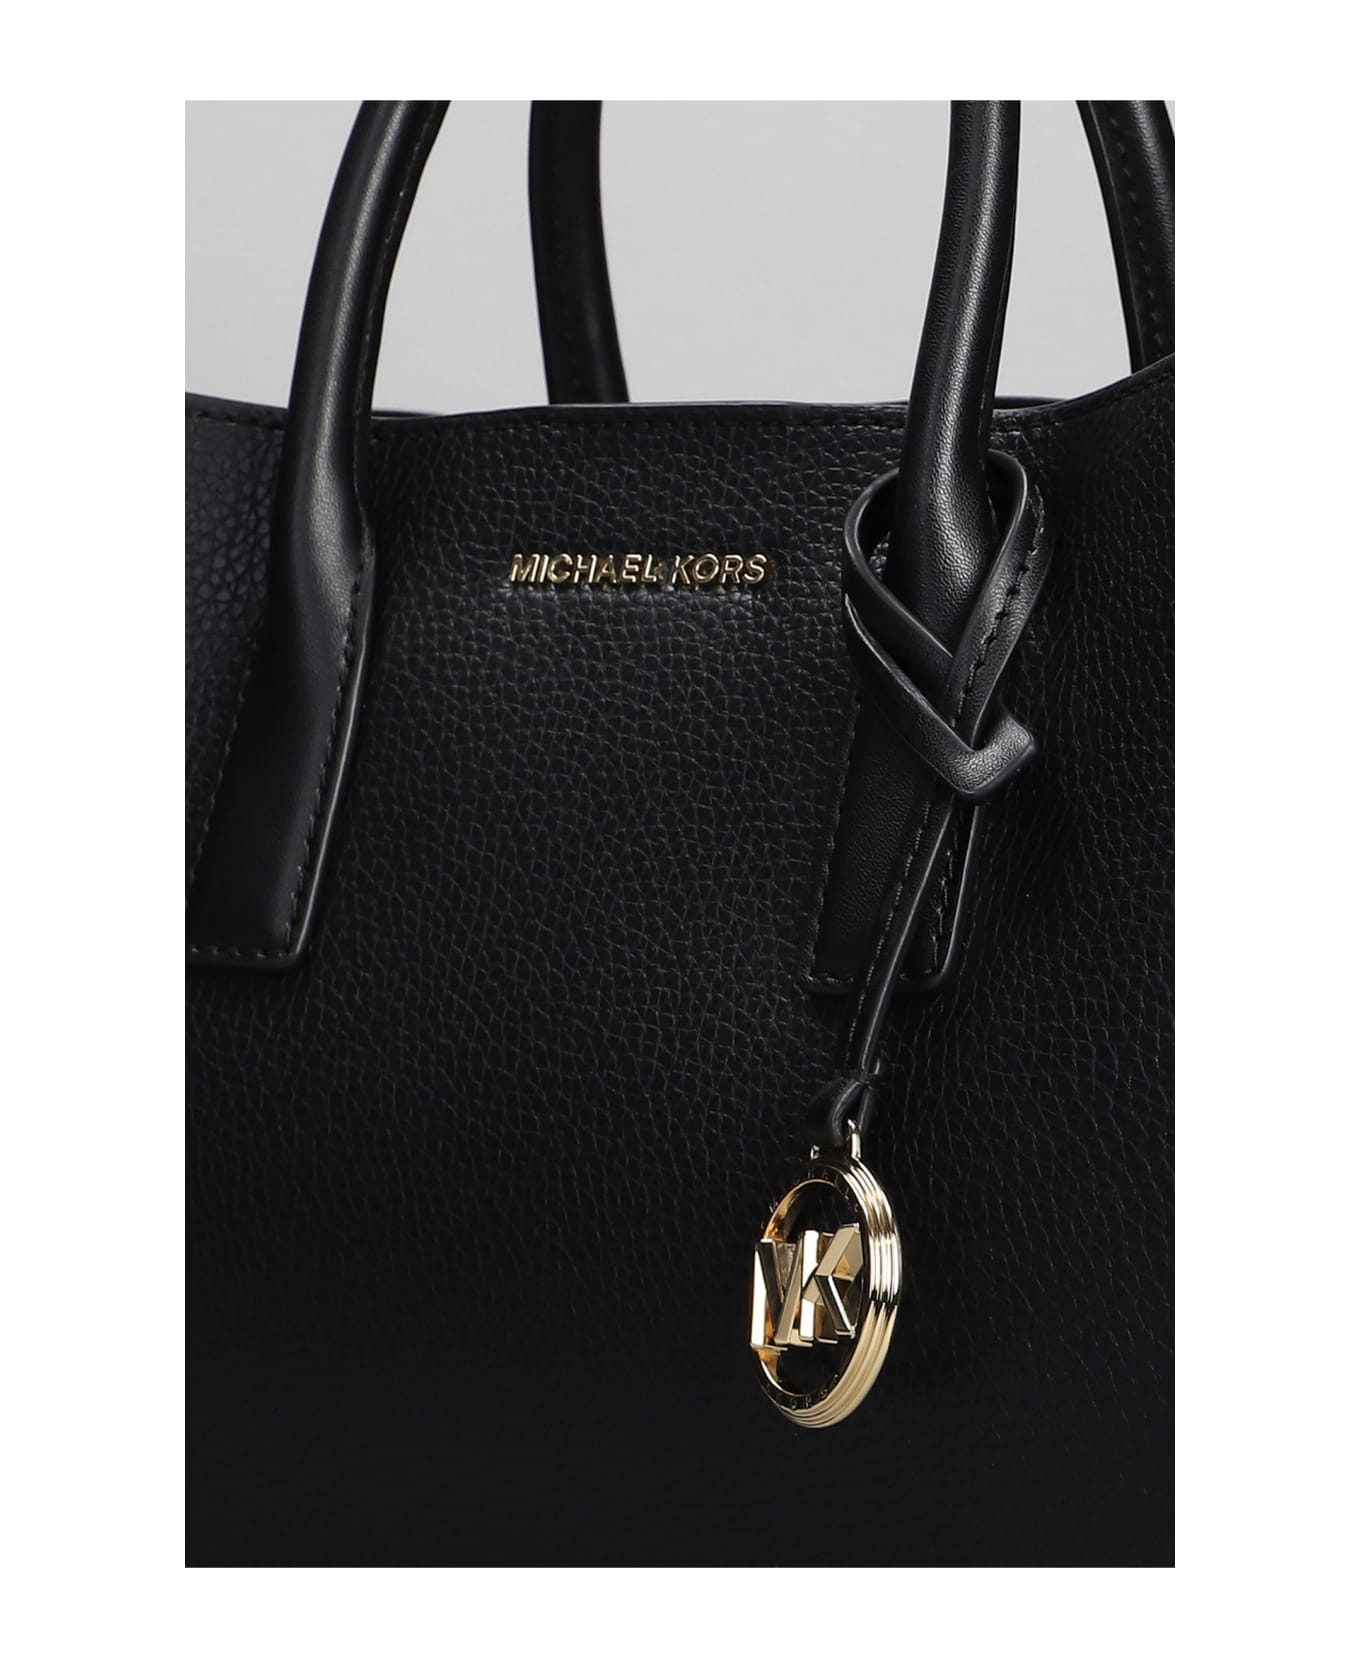 Michael Kors Ruthie Hand Bag In Black Leather - black